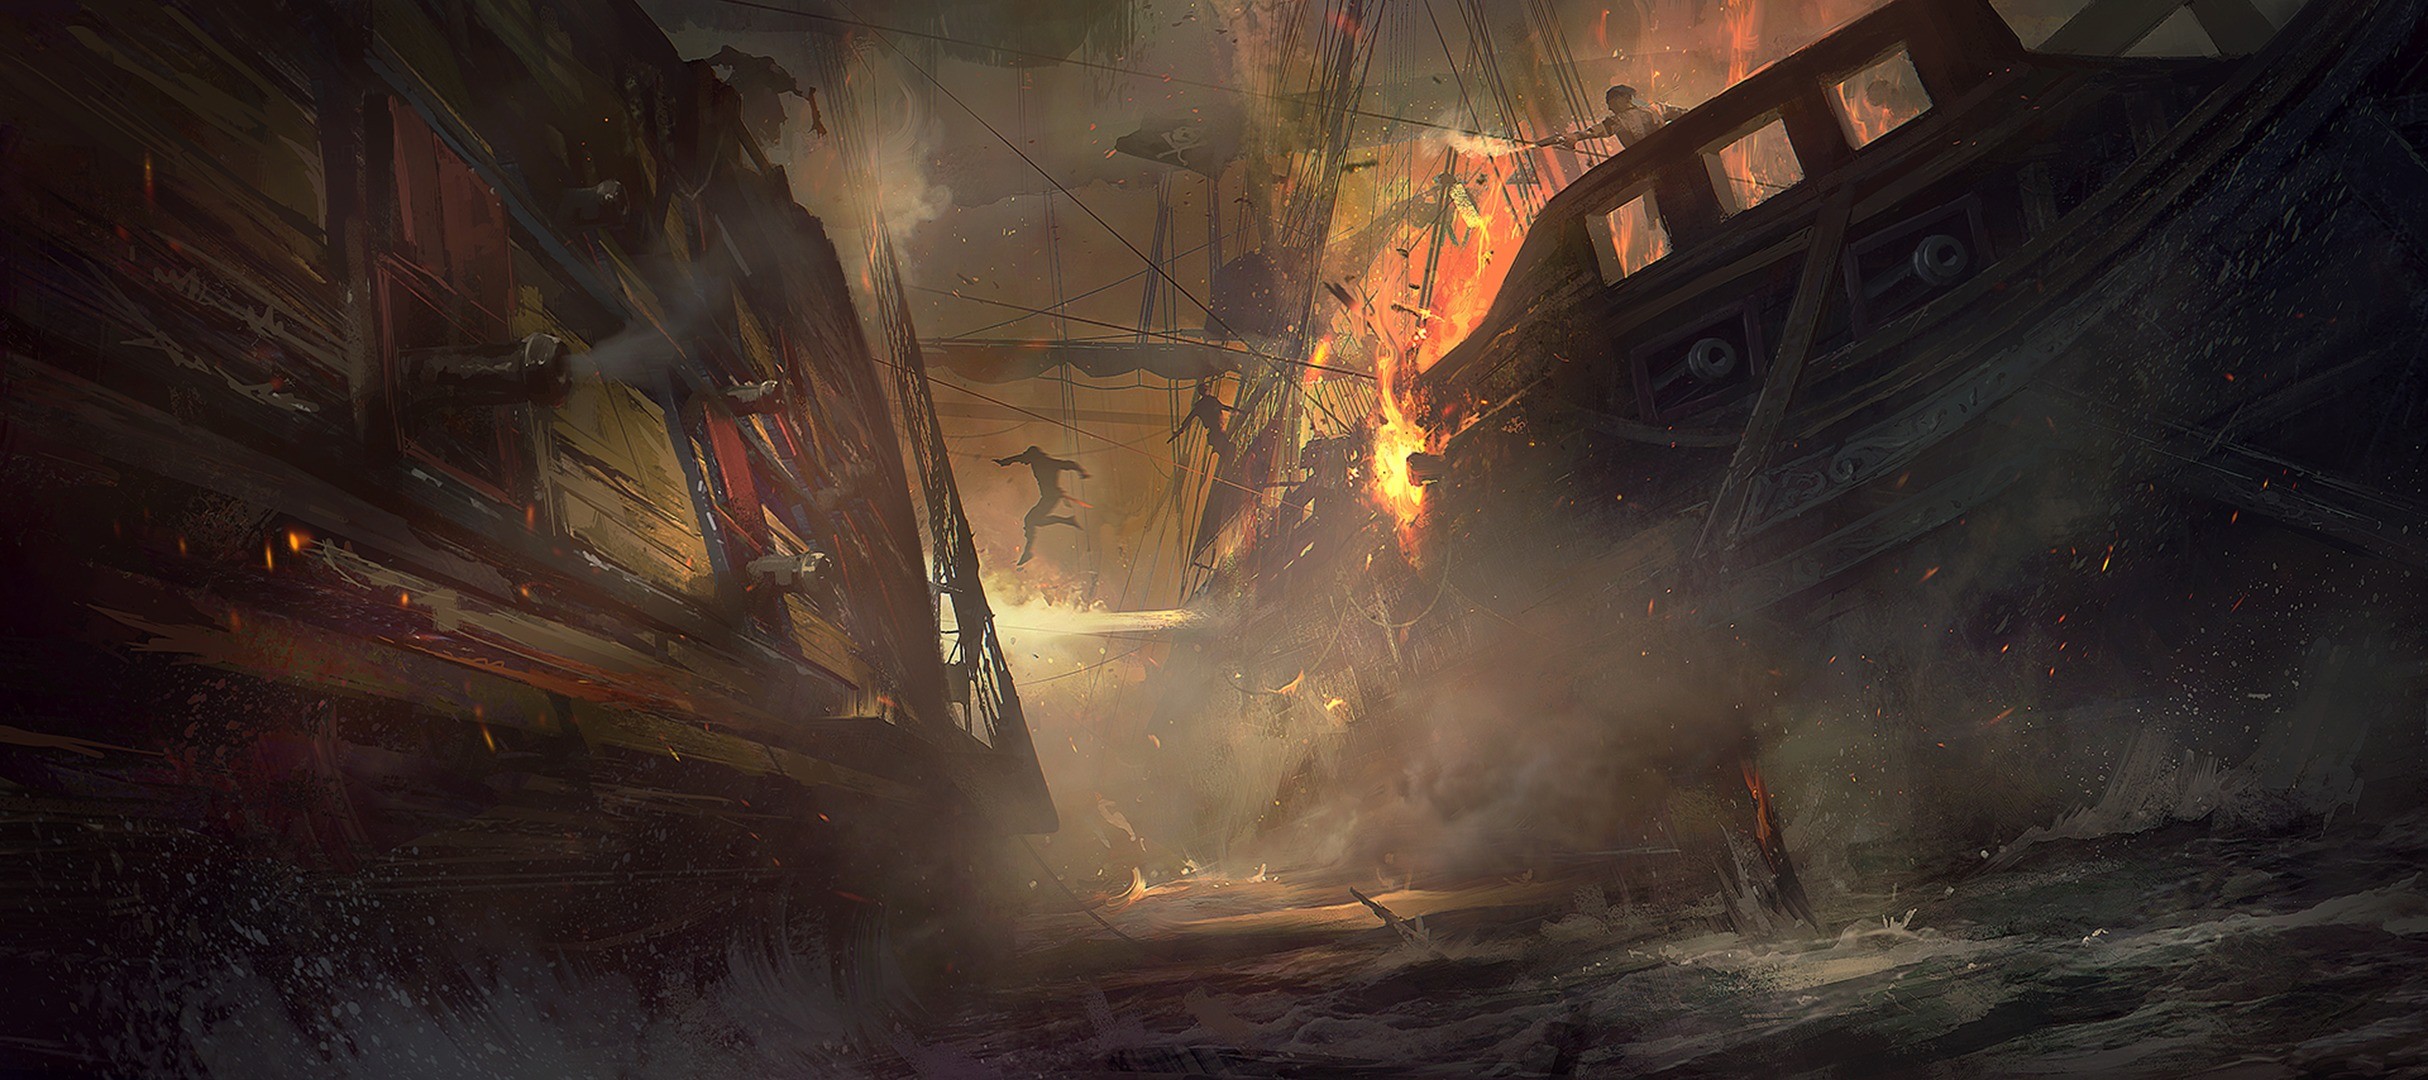 General 2428x1080 fantasy art artwork pirates ship naval battles battle vehicle fire burning sailing ship